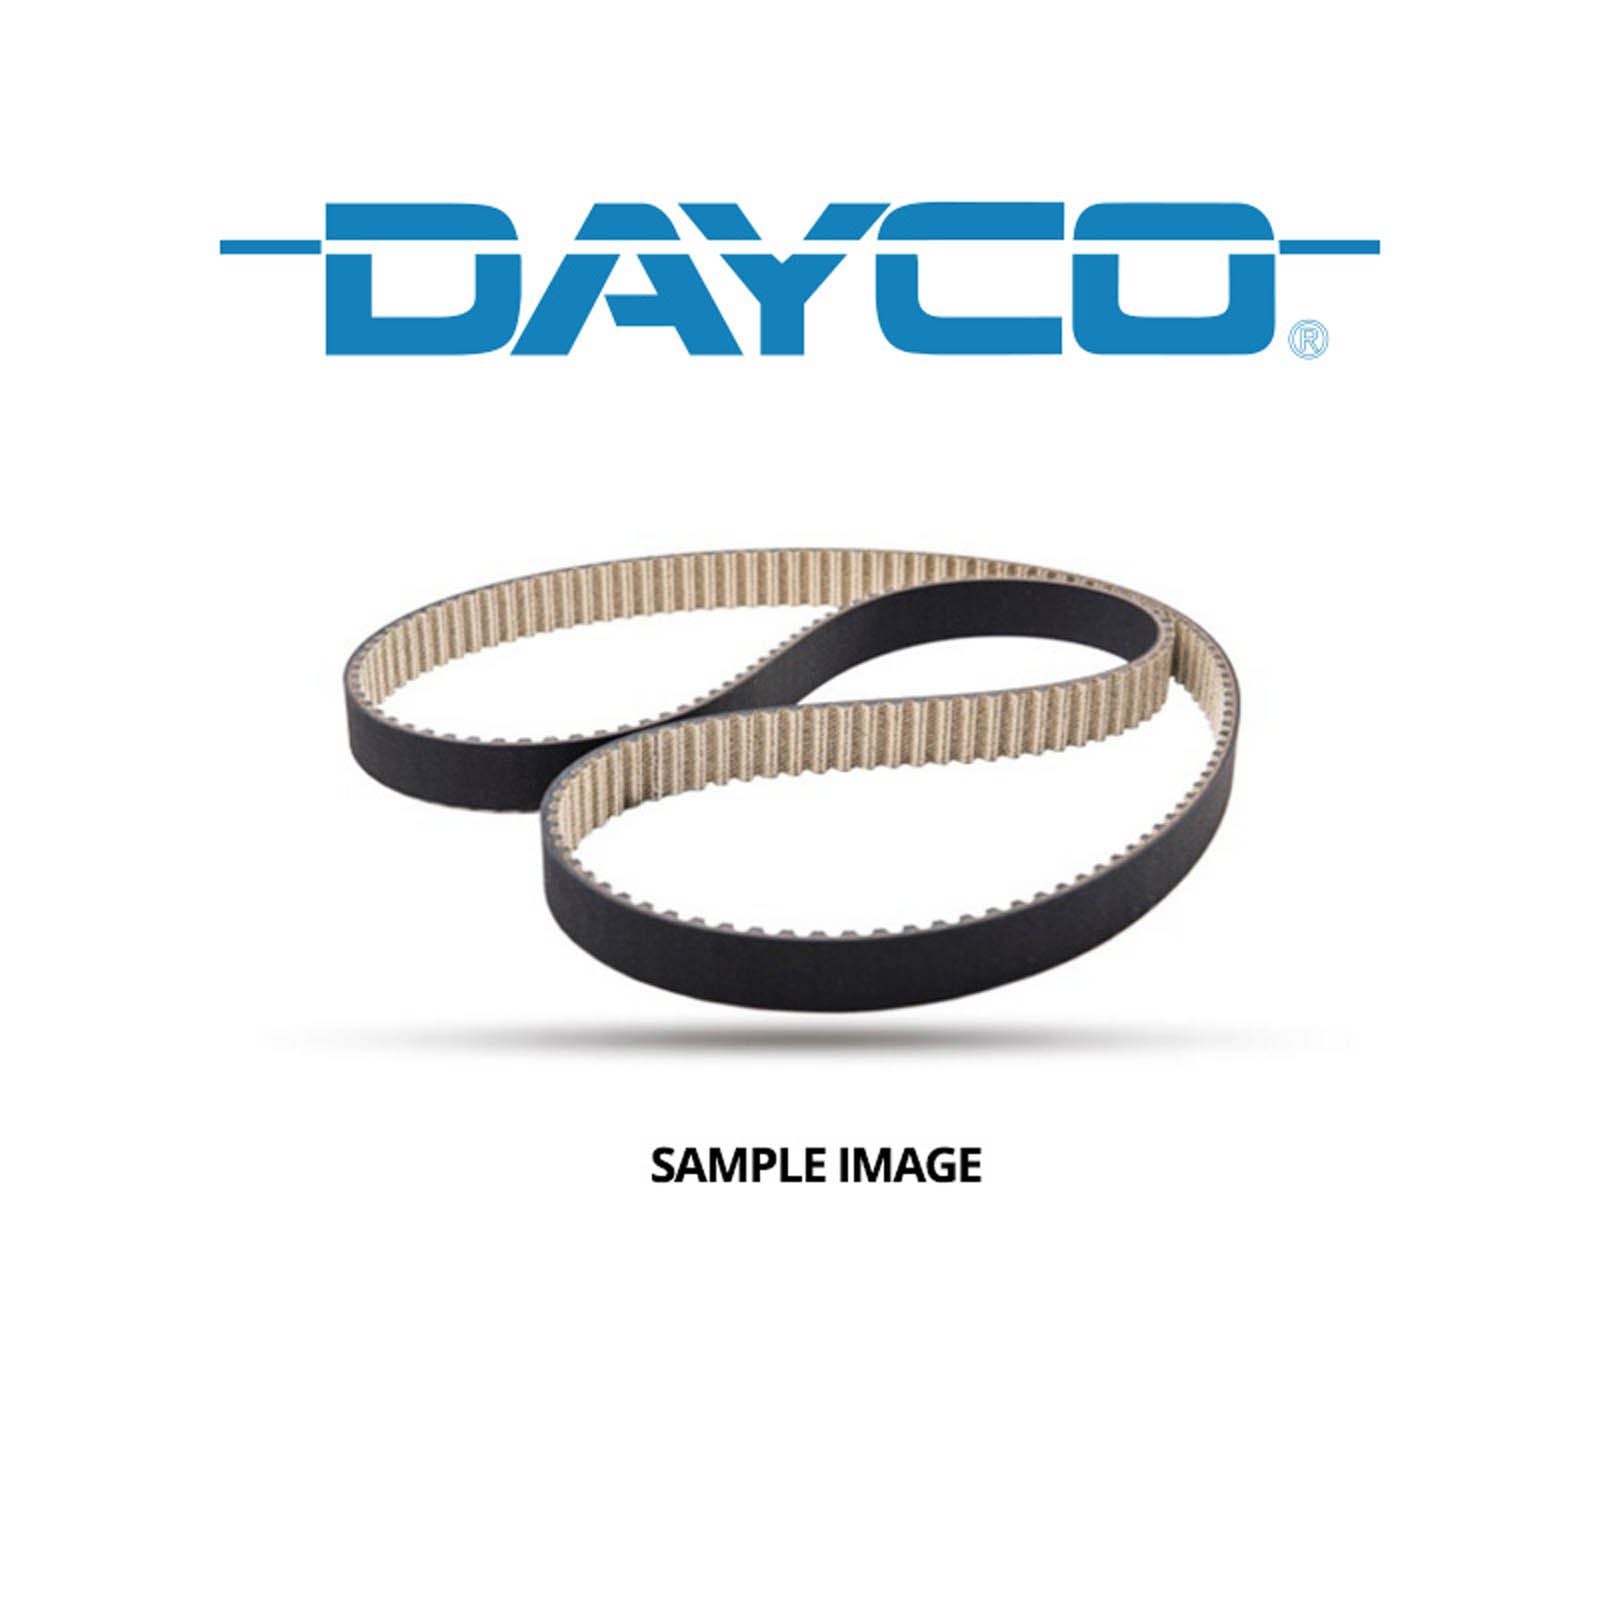 New DAYCO ATV Drive Belt HP 30.0 X 1041 HP2004 #ATVDBHP2004